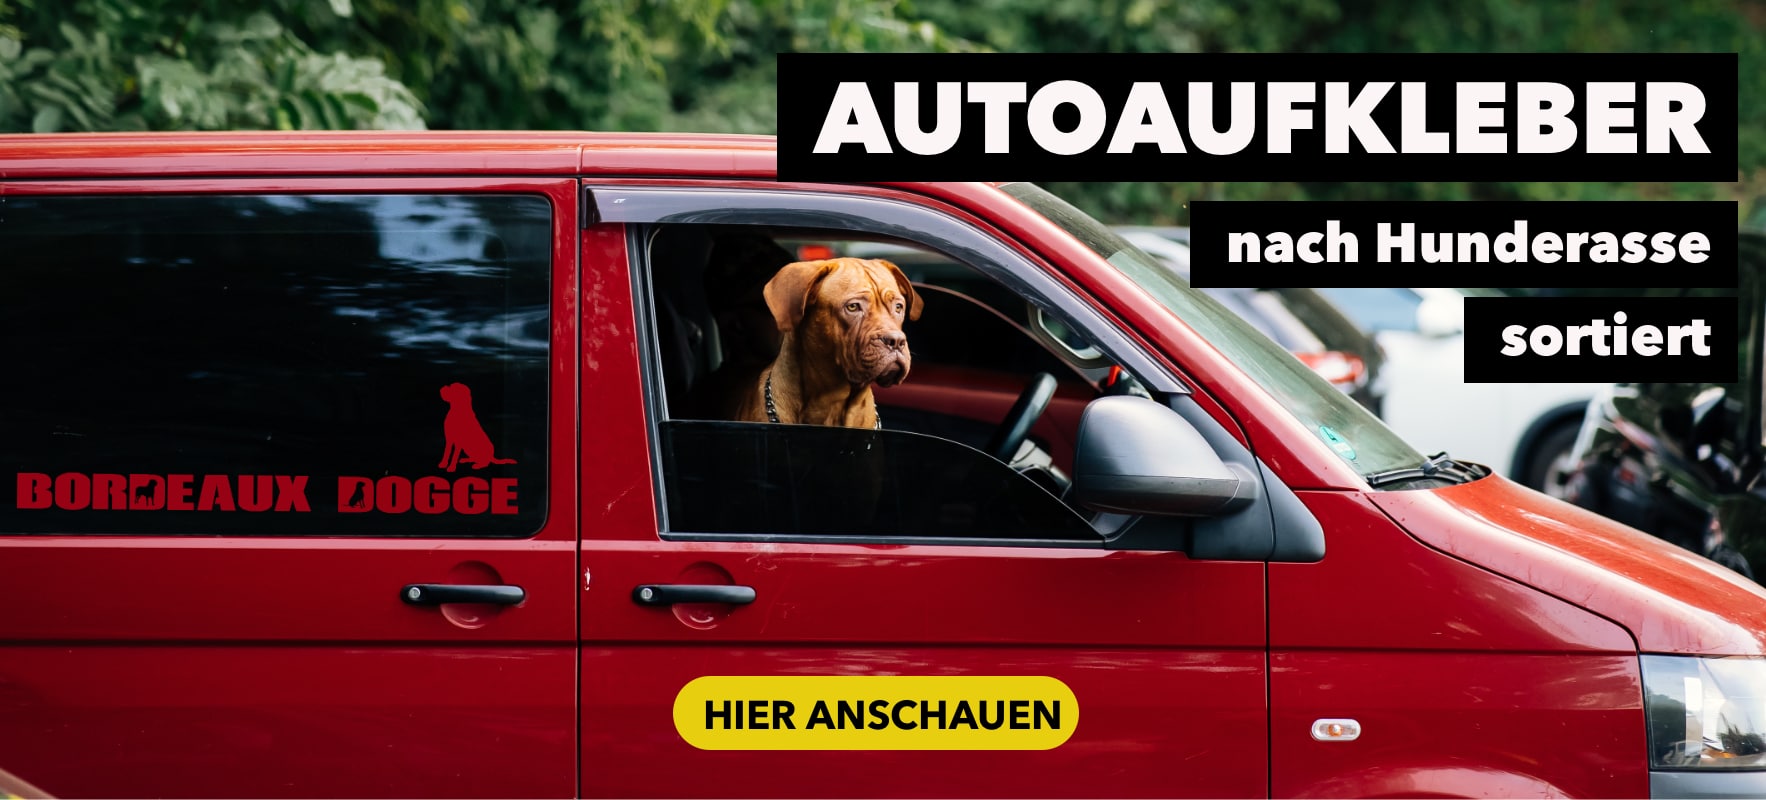 Hovawart Aufkleber, Haustier Auto Aufkleber, Hund Aufkleber, Auto-Dekoration,  lustige Aufkleber, 3D-Aufkleber - .de